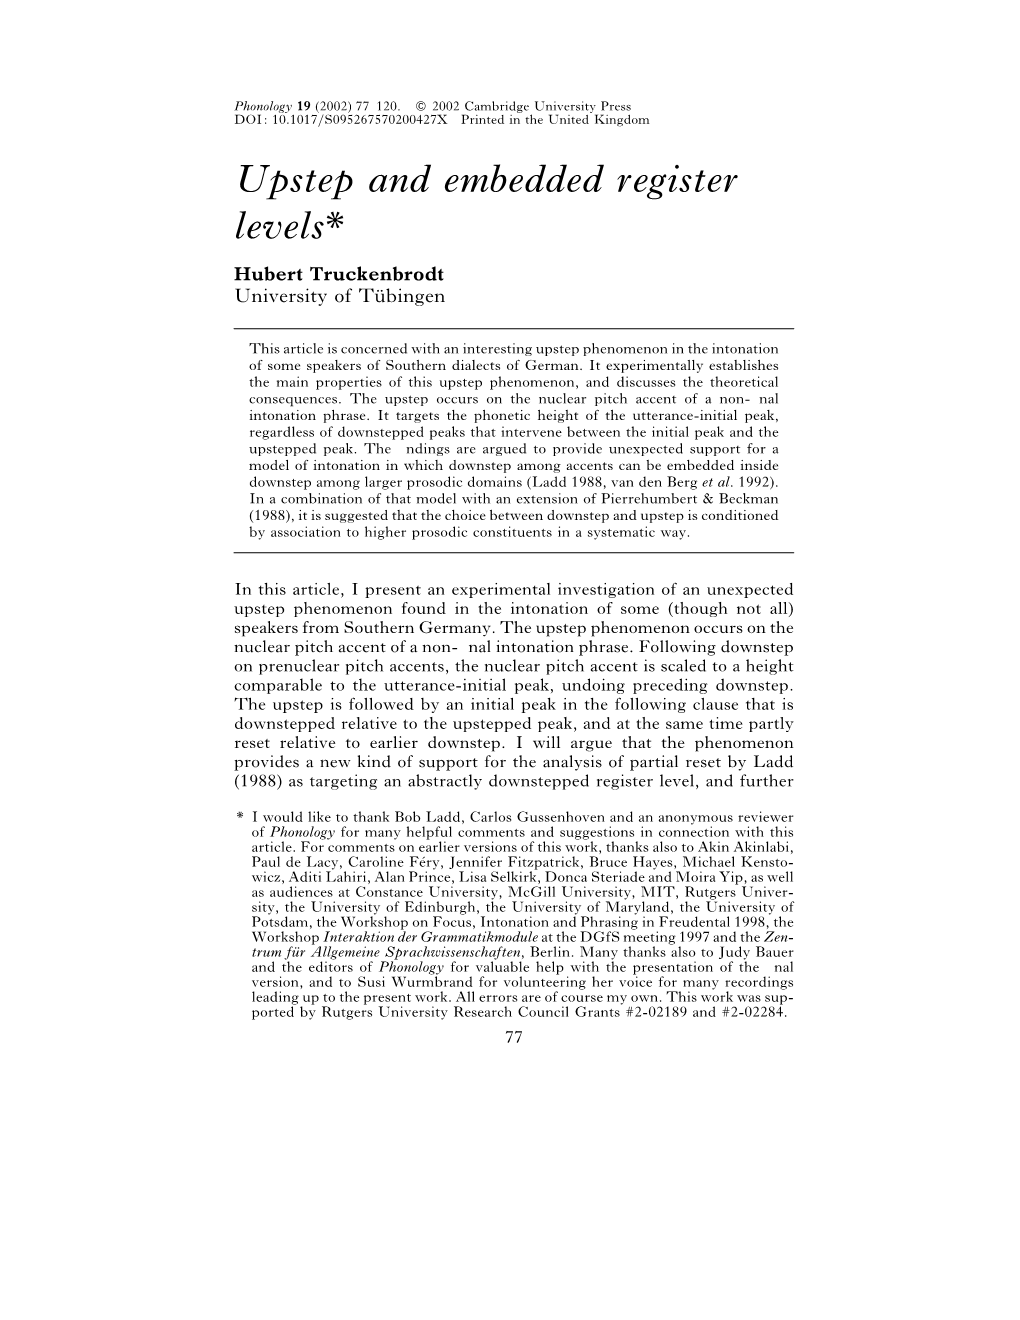 Upstep and Embedded Register Levels* Hubert Truckenbrodt University of Tu￿ Bingen